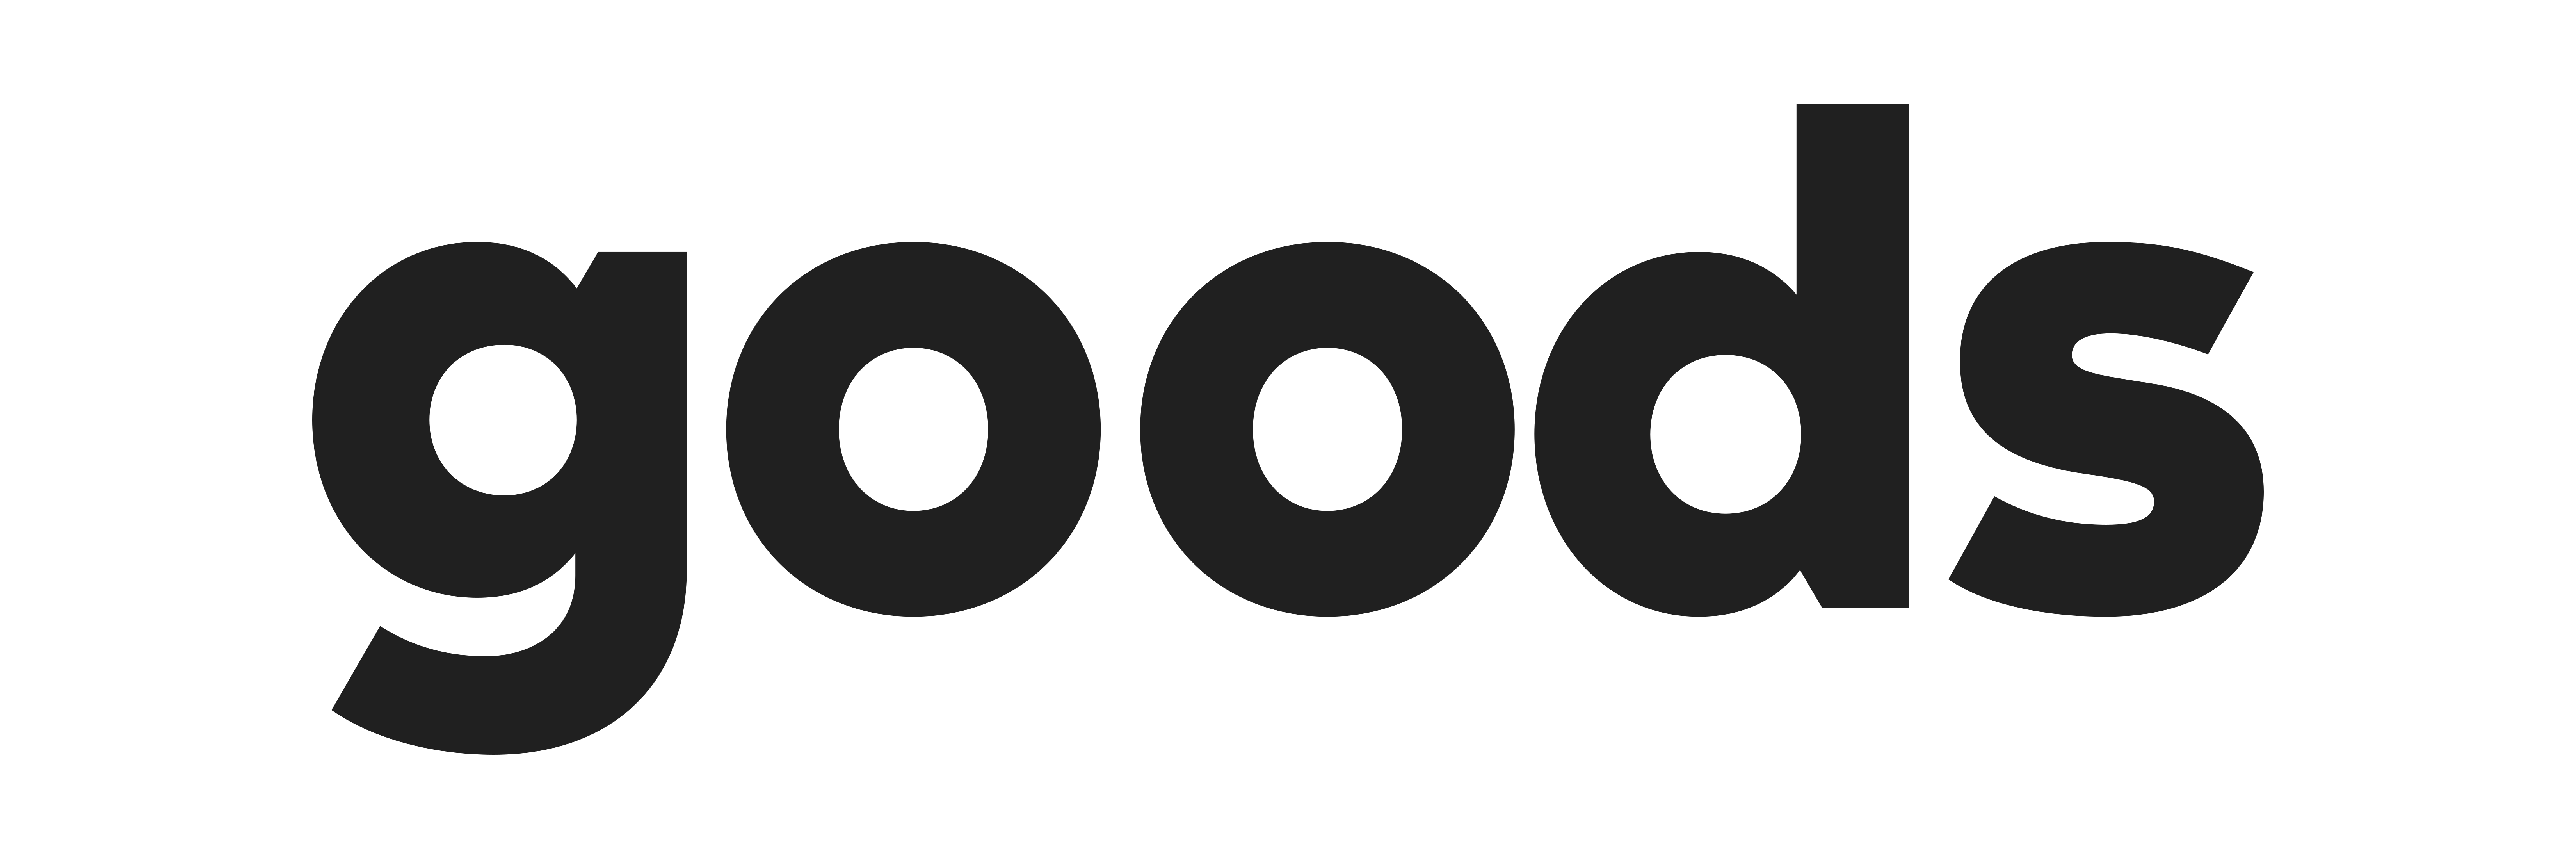 Эмблема goods. Маркетплейс goods. Логотип интернет магазина. S good ru